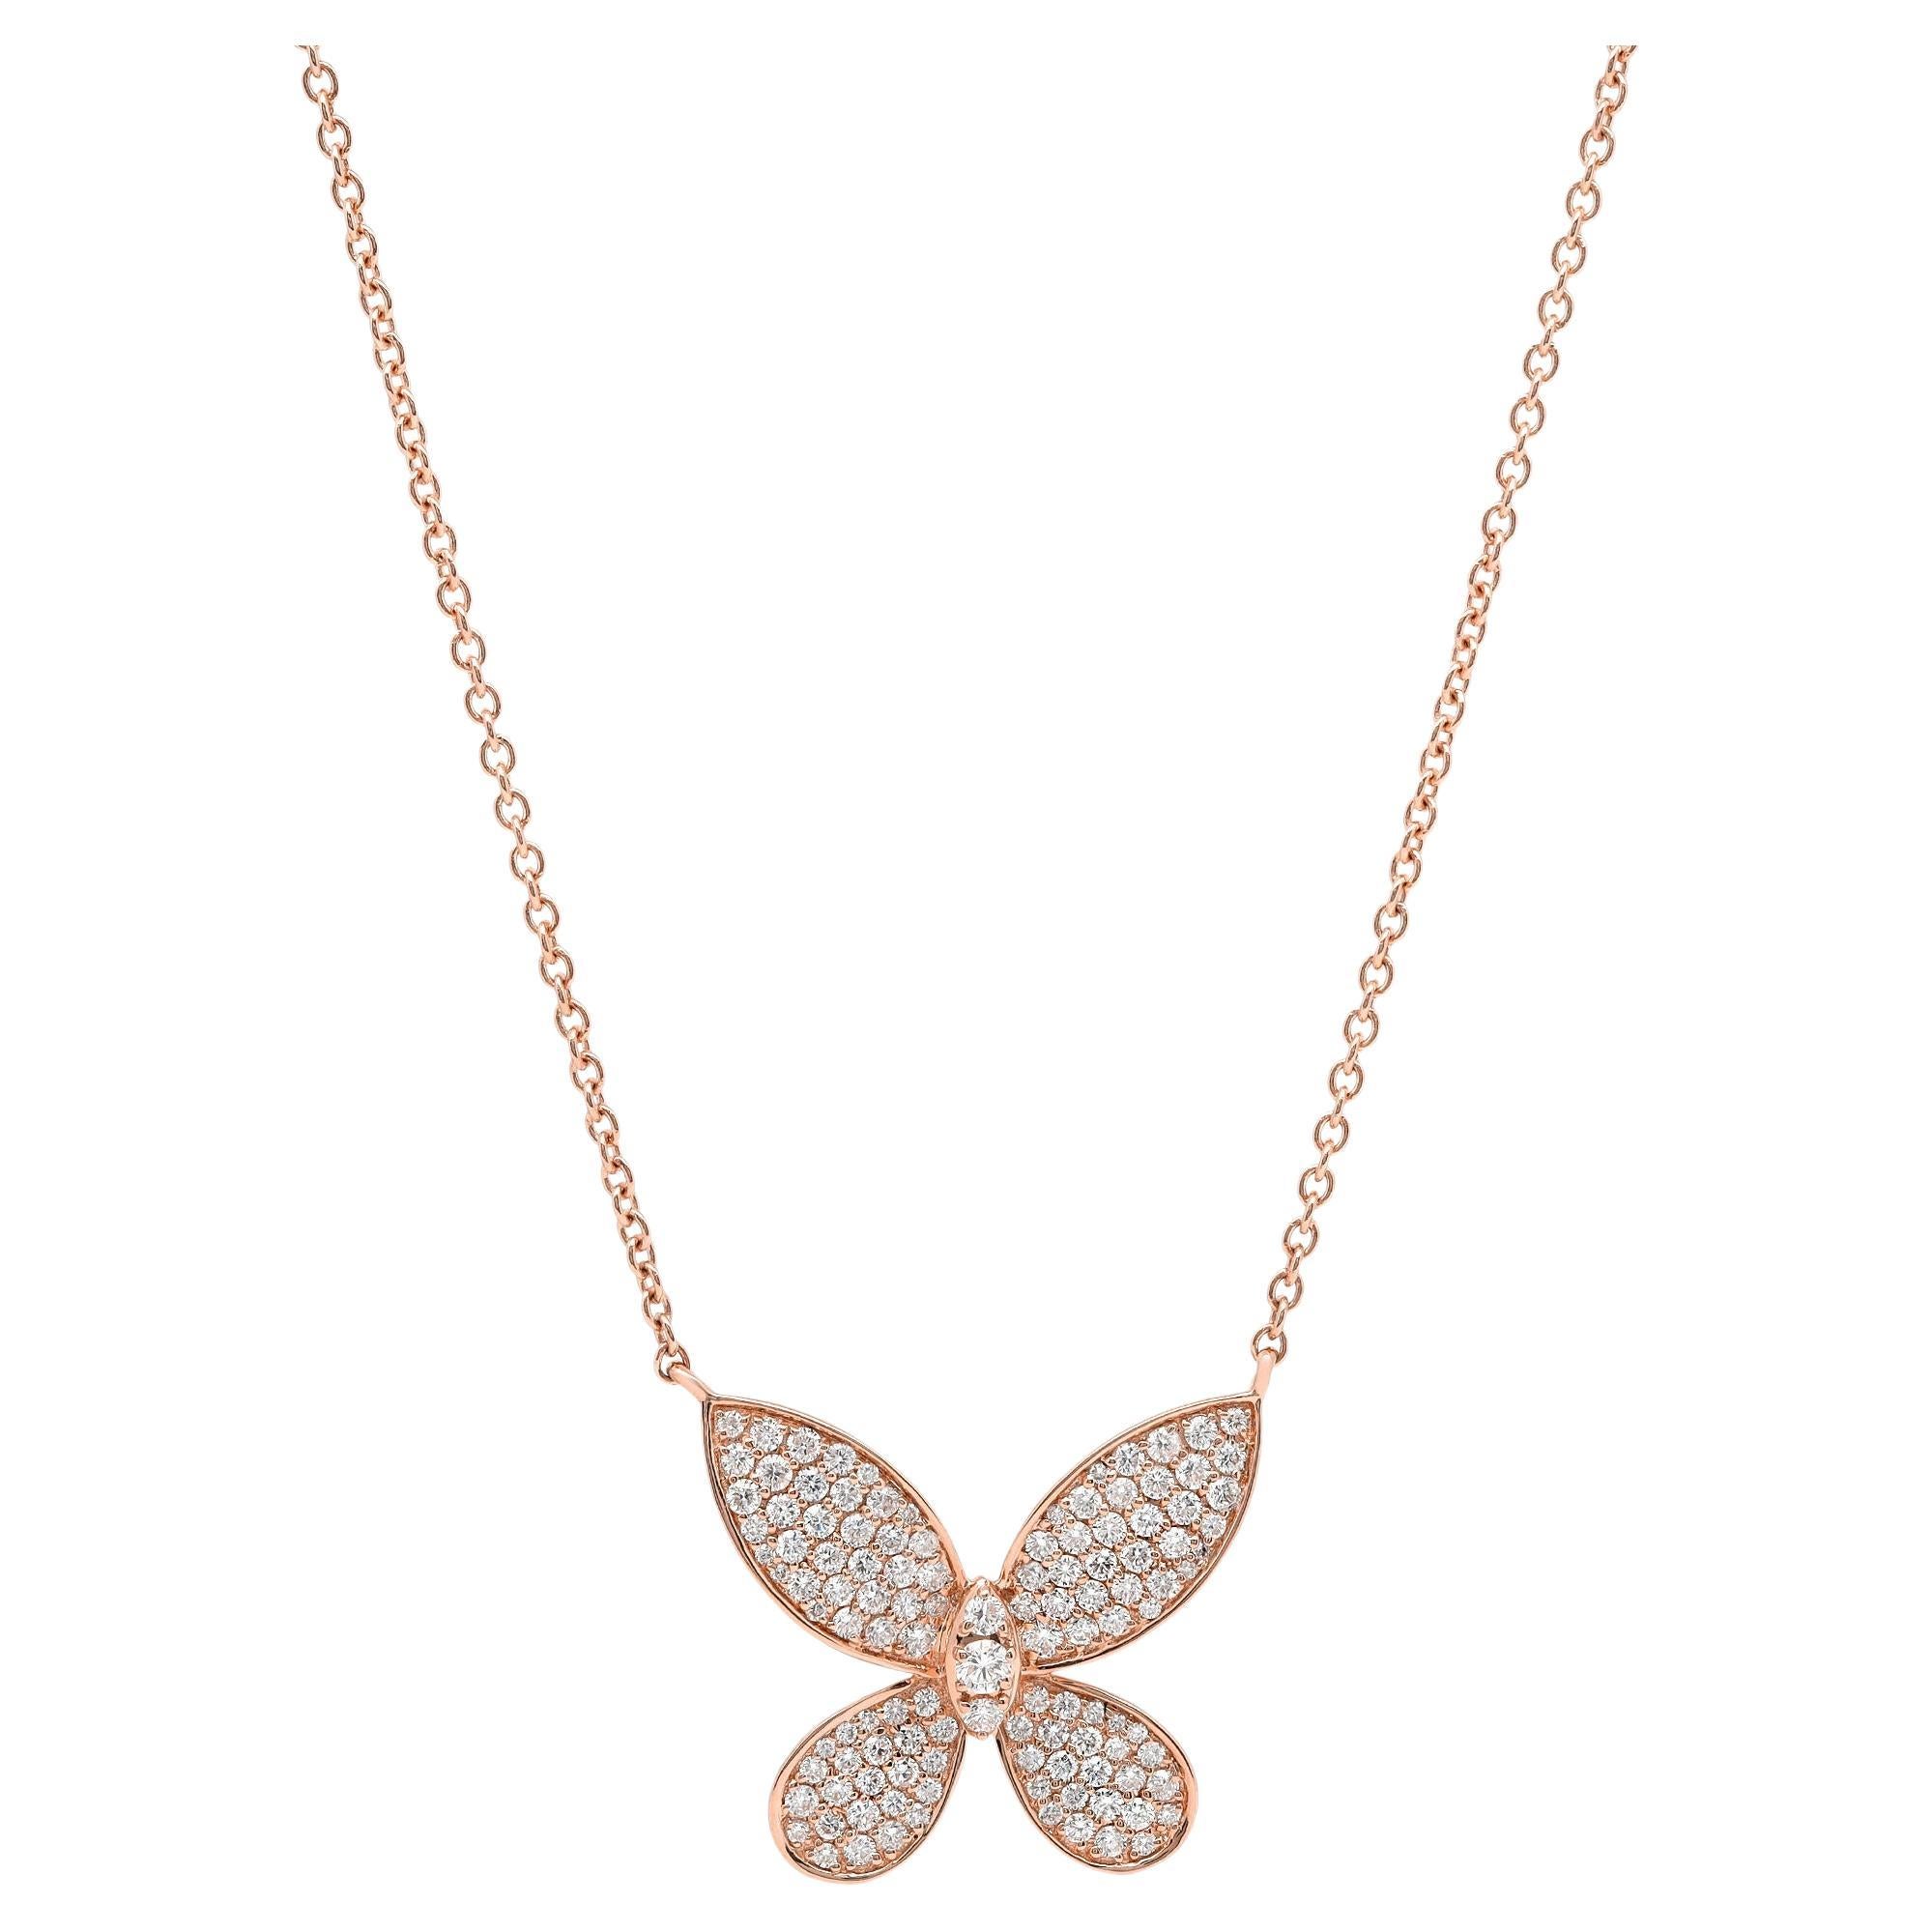 1.01cttw Pave Set Round Cut Diamond Butterfly Pendant Necklace 18K Rose Gold